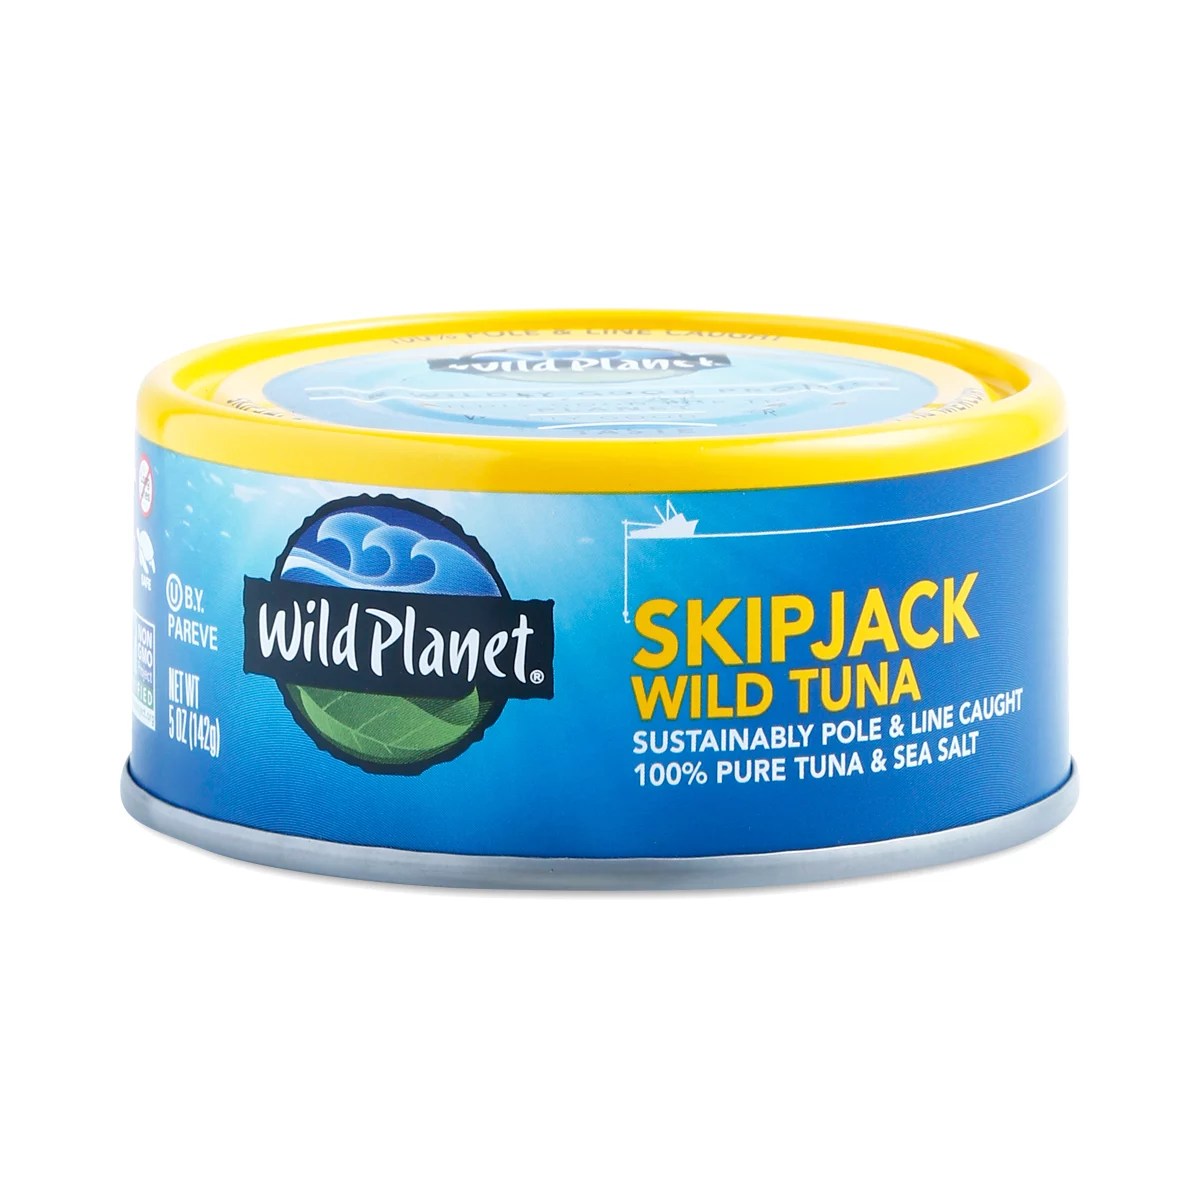 Wild Planet Skipjack Wild Tuna